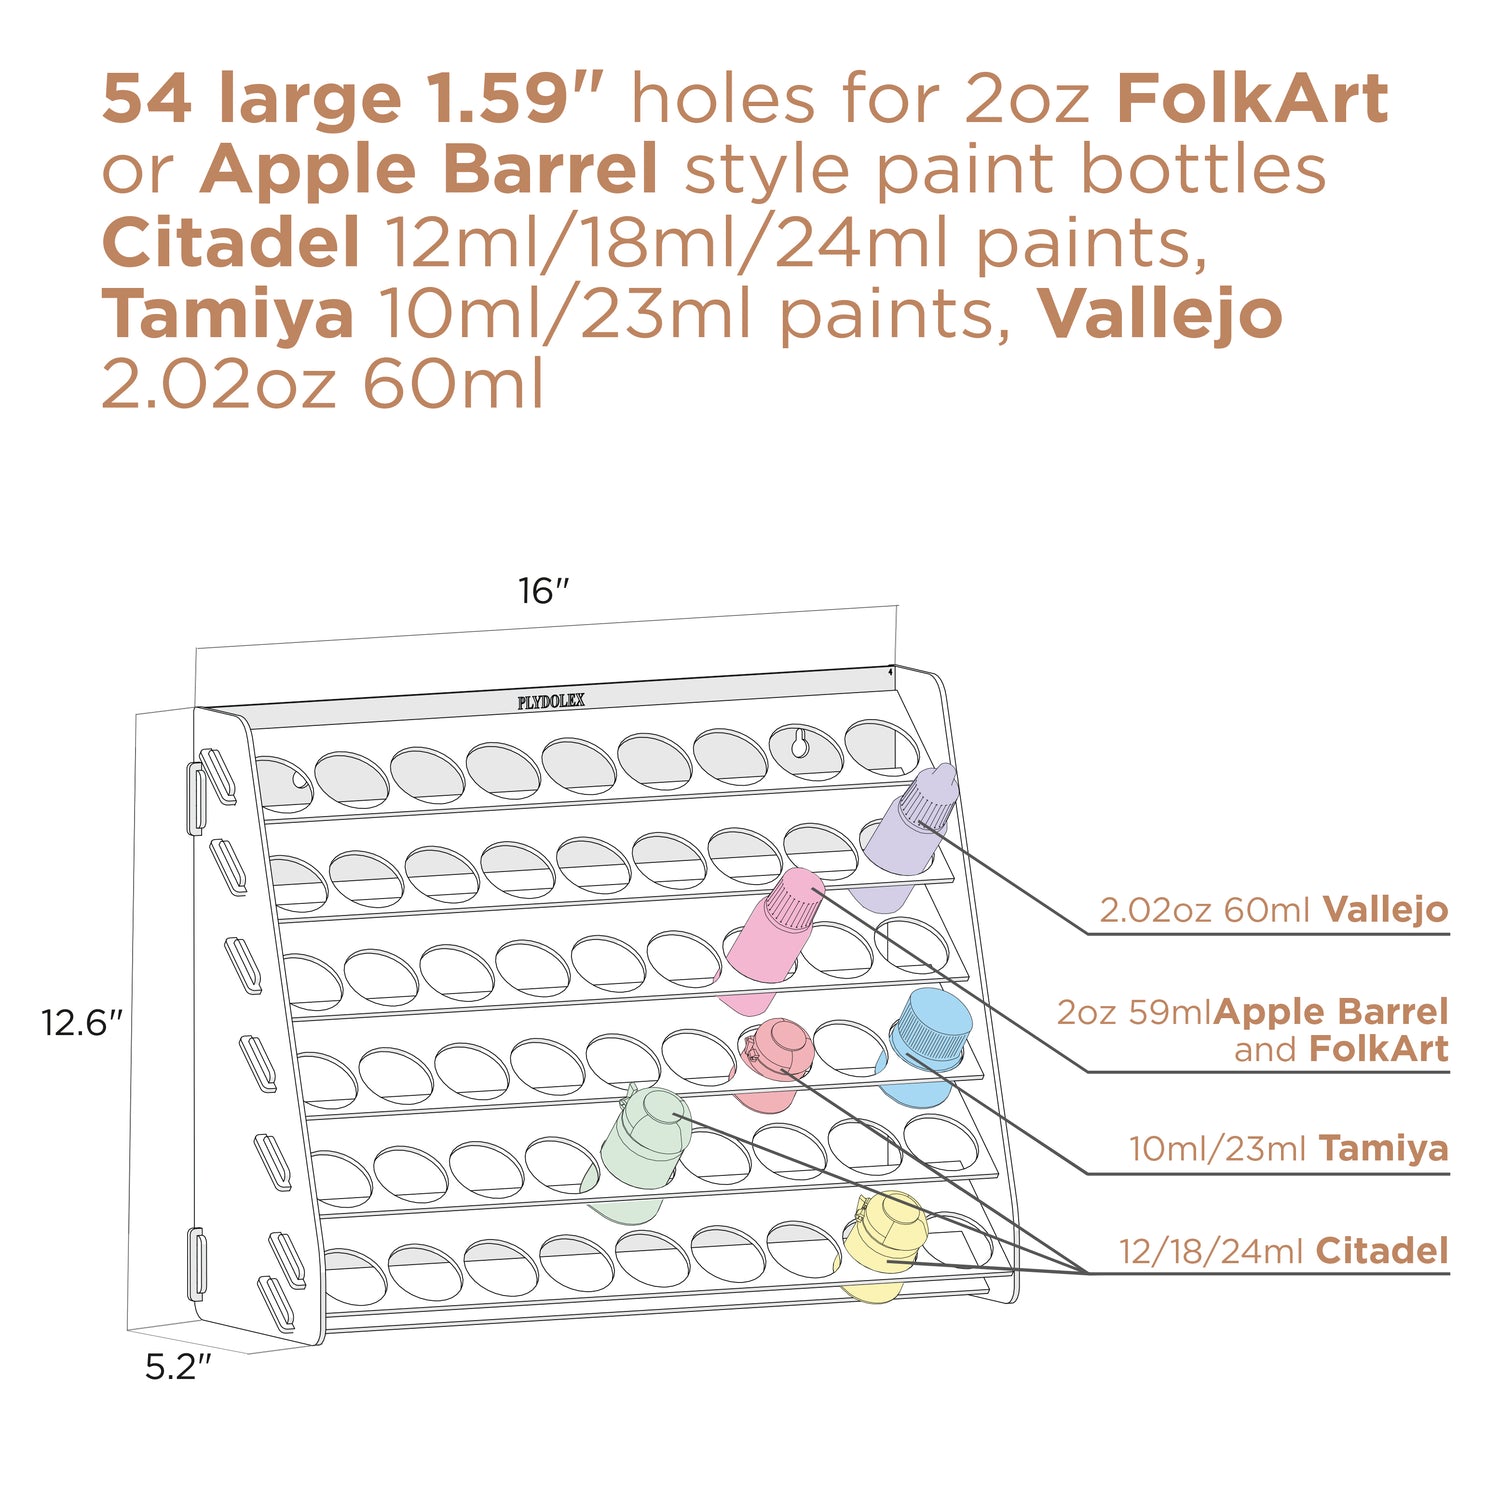 Plydolex Tamiya Paint Rack Organizer with 54 Holes for Miniature Paint